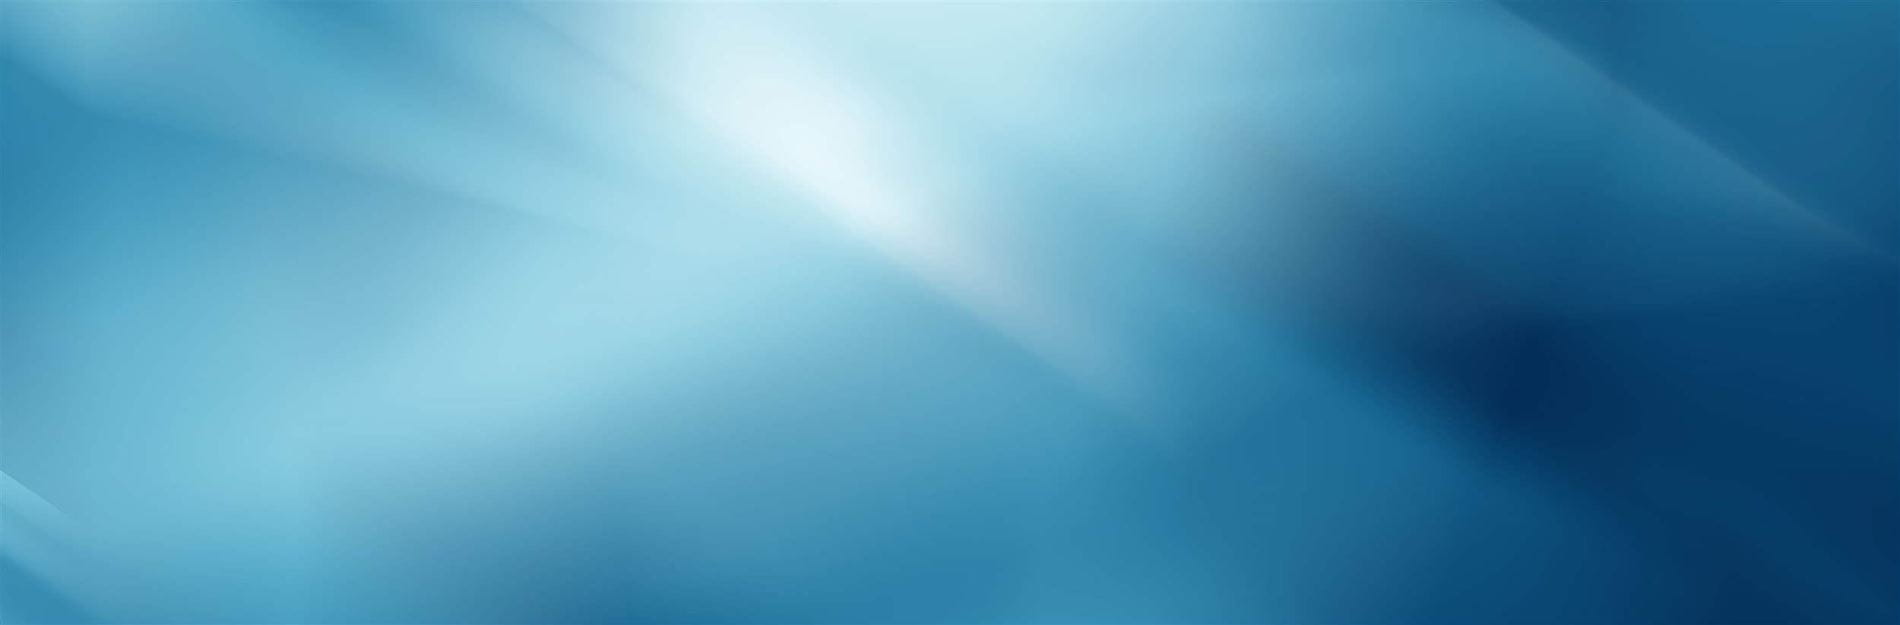 light-blue-gradient-background